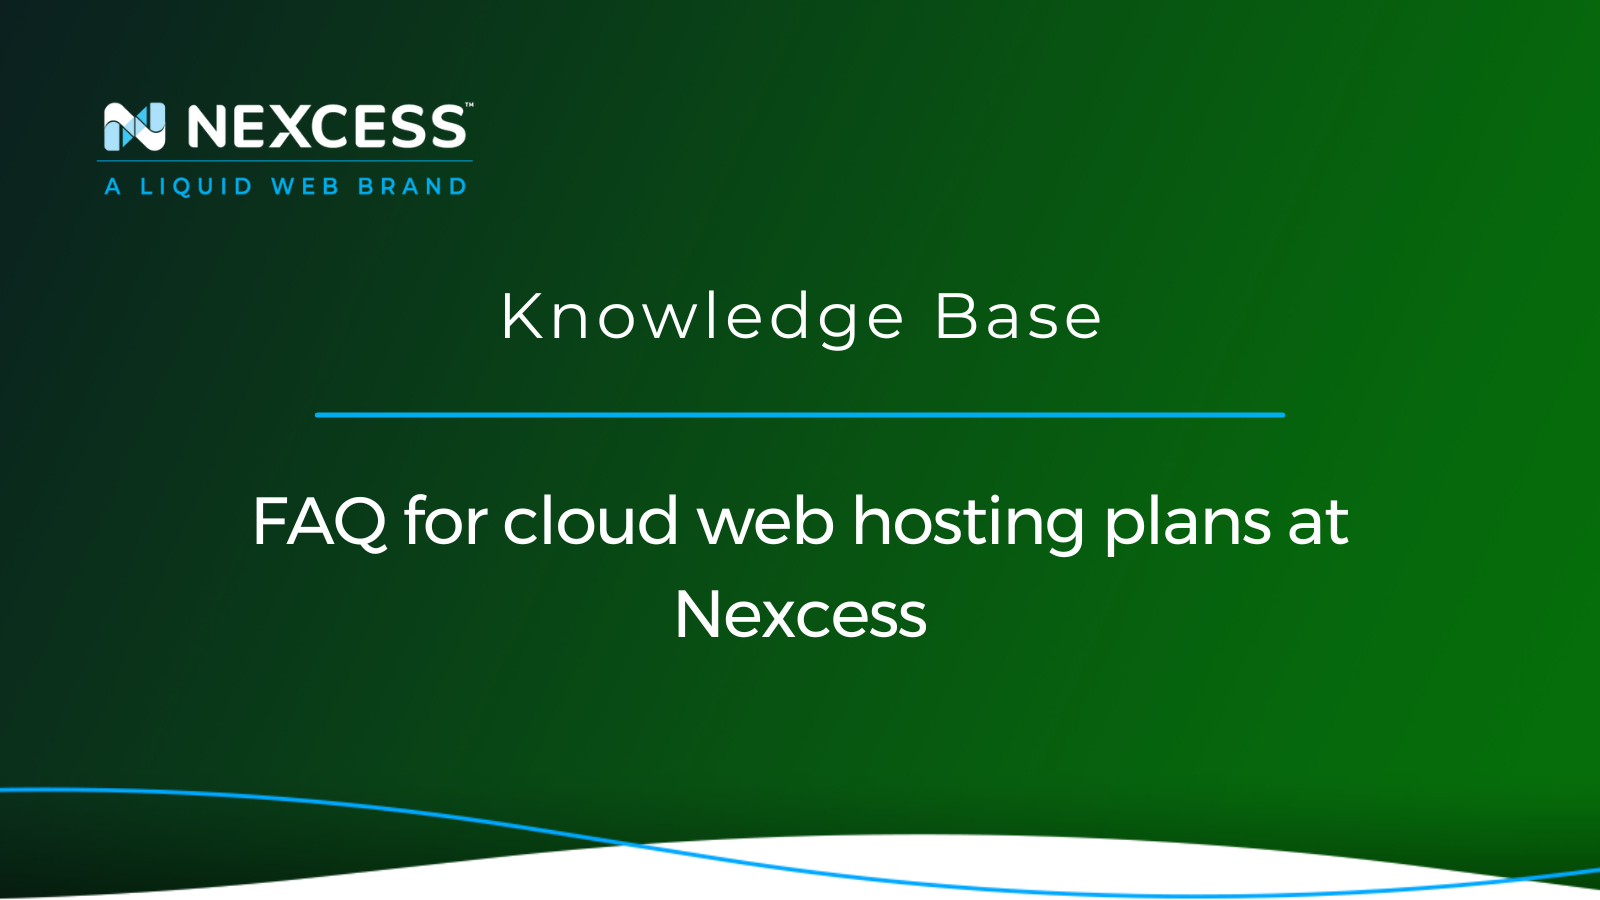 FAQ for cloud web hosting plans at Nexcess